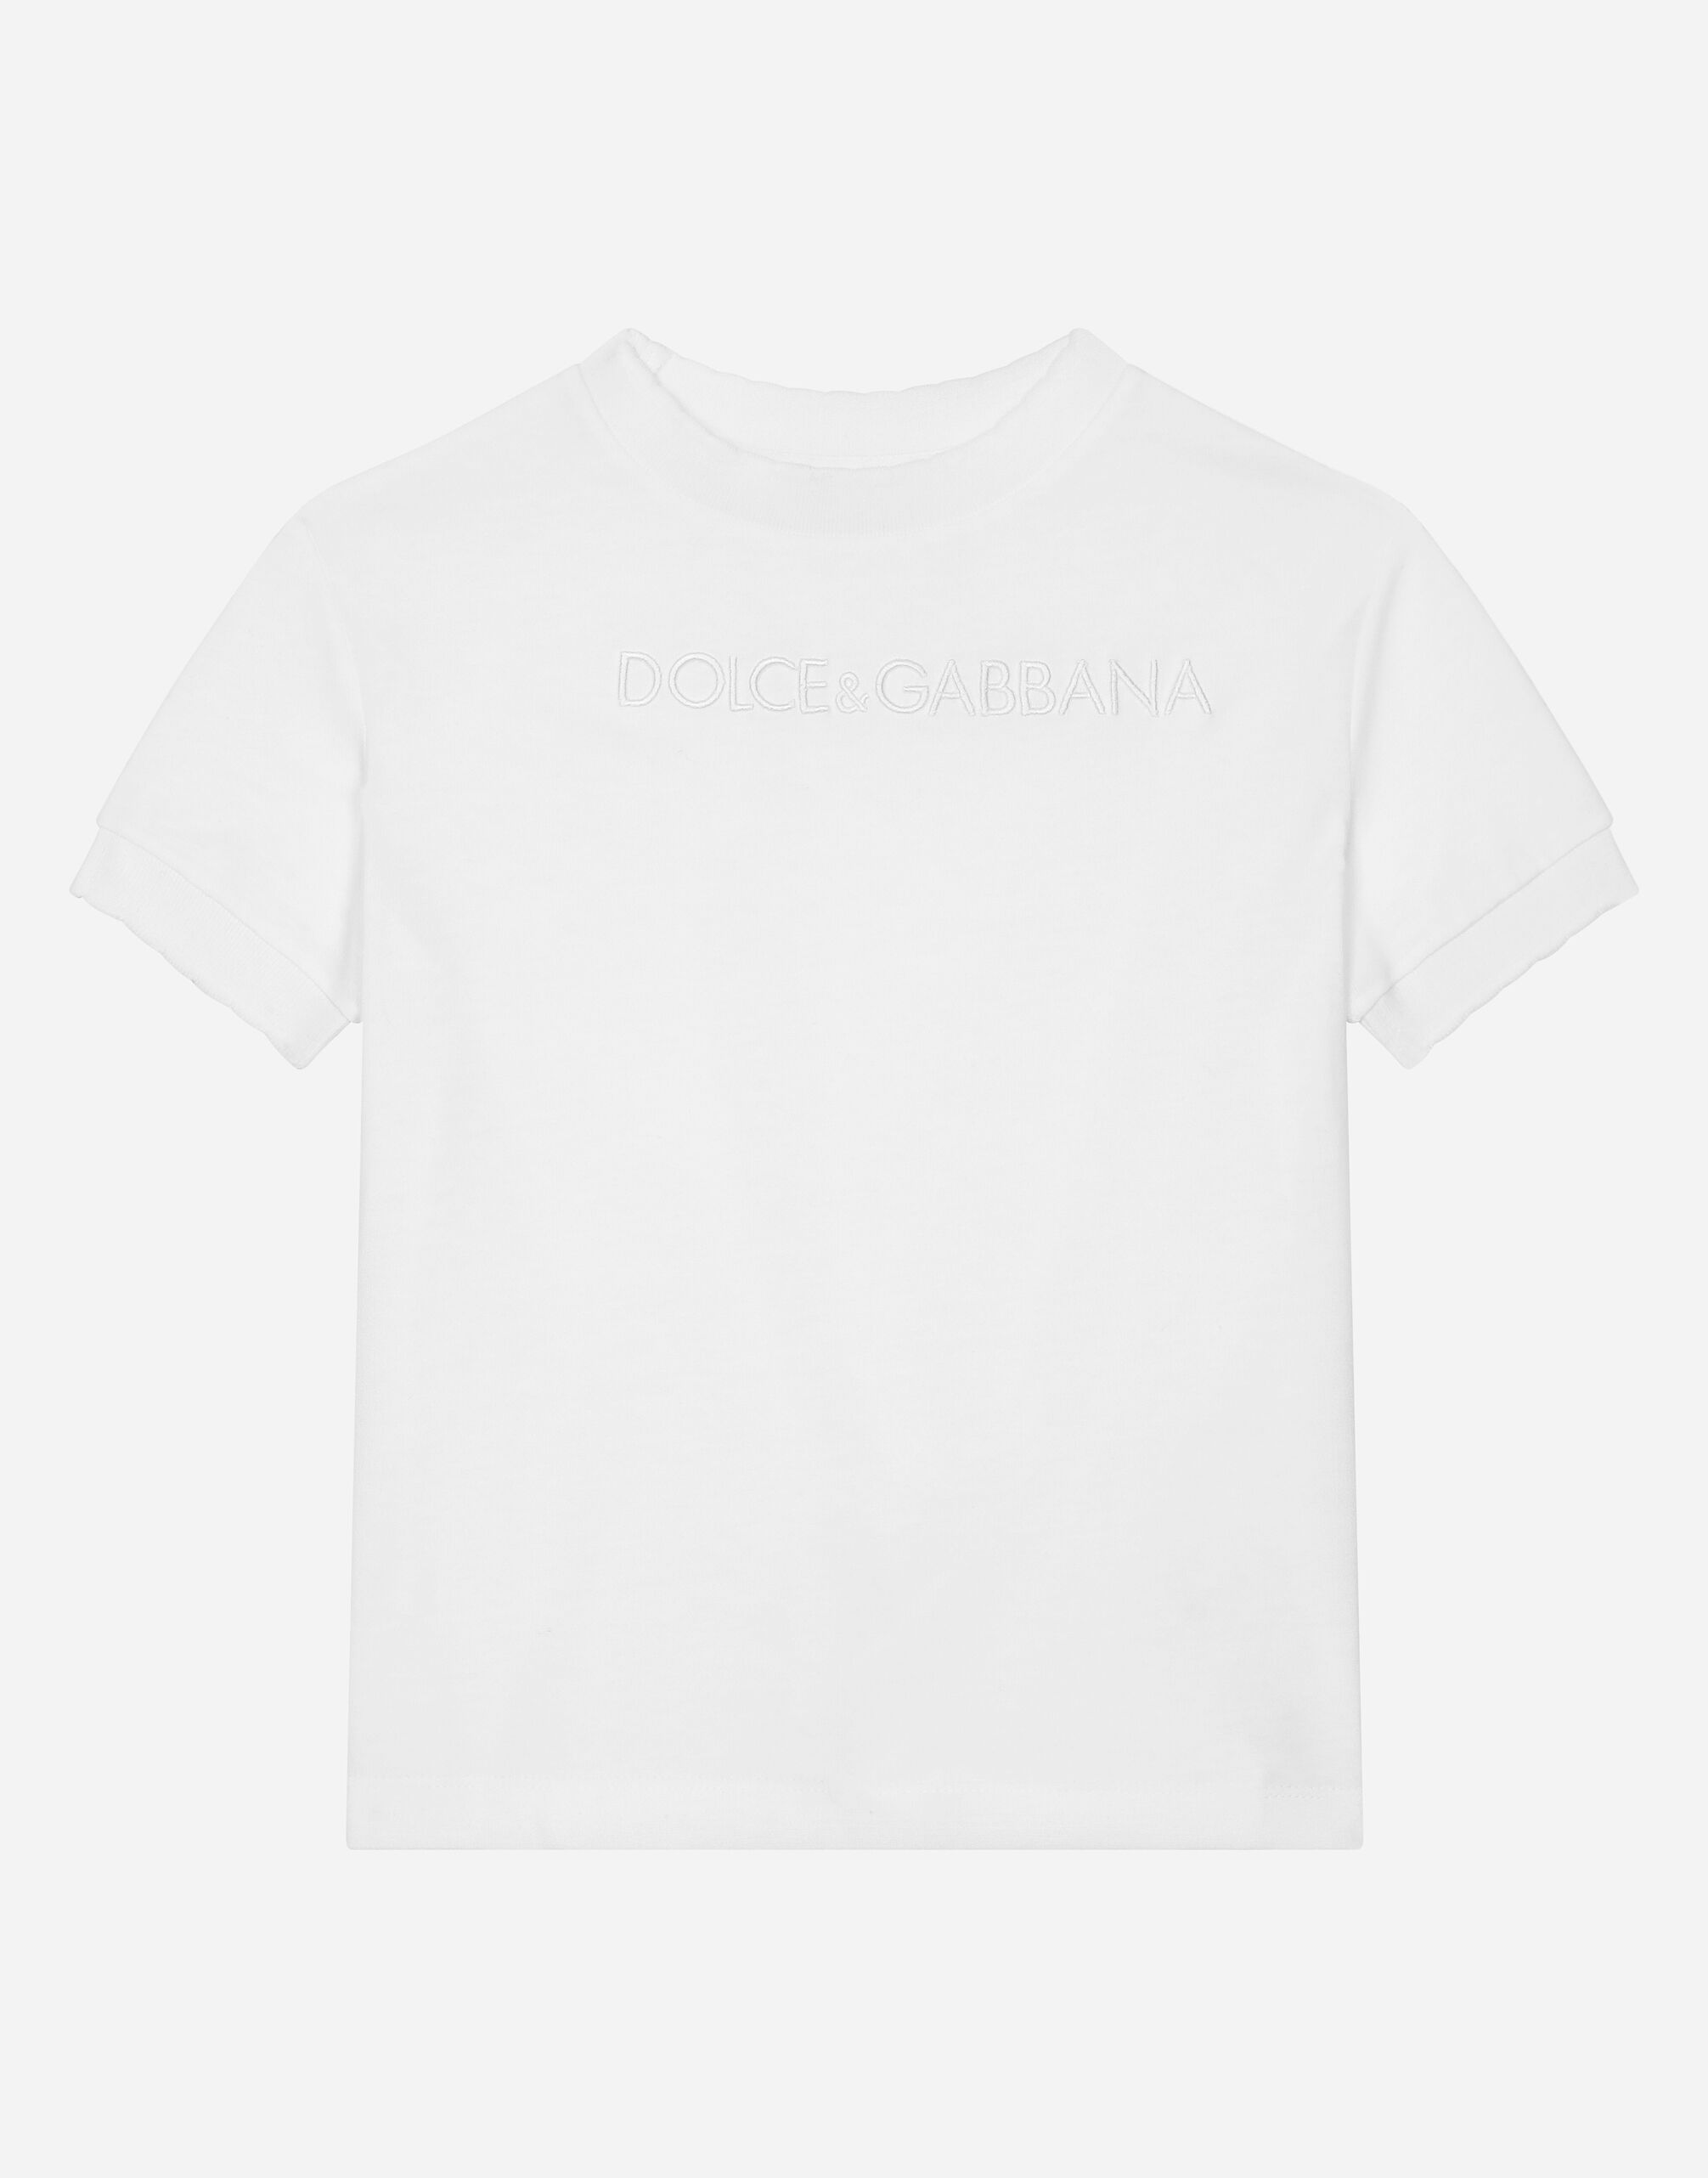 ${brand} Camiseta de punto con logotipo Dolce&Gabbana ${colorDescription} ${masterID}